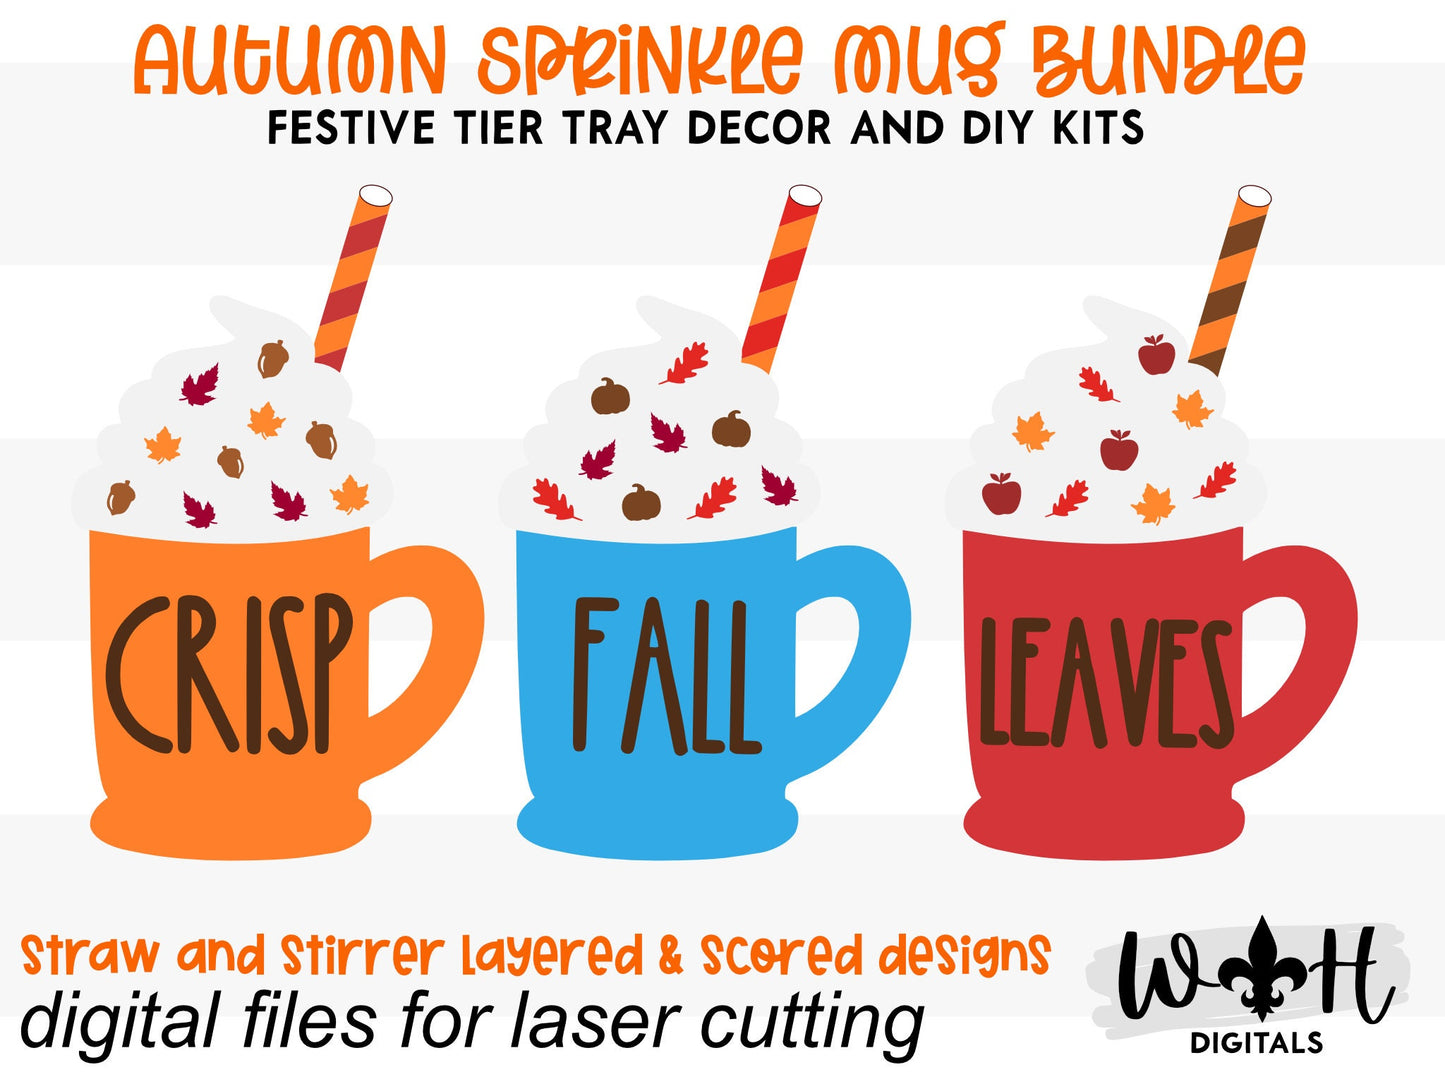 Autumn Sprinkle Mugs Bundle - Seasonal Tiered Tray Decor and DIY Kits - Cut File For Glowforge Lasers - Digital SVG File